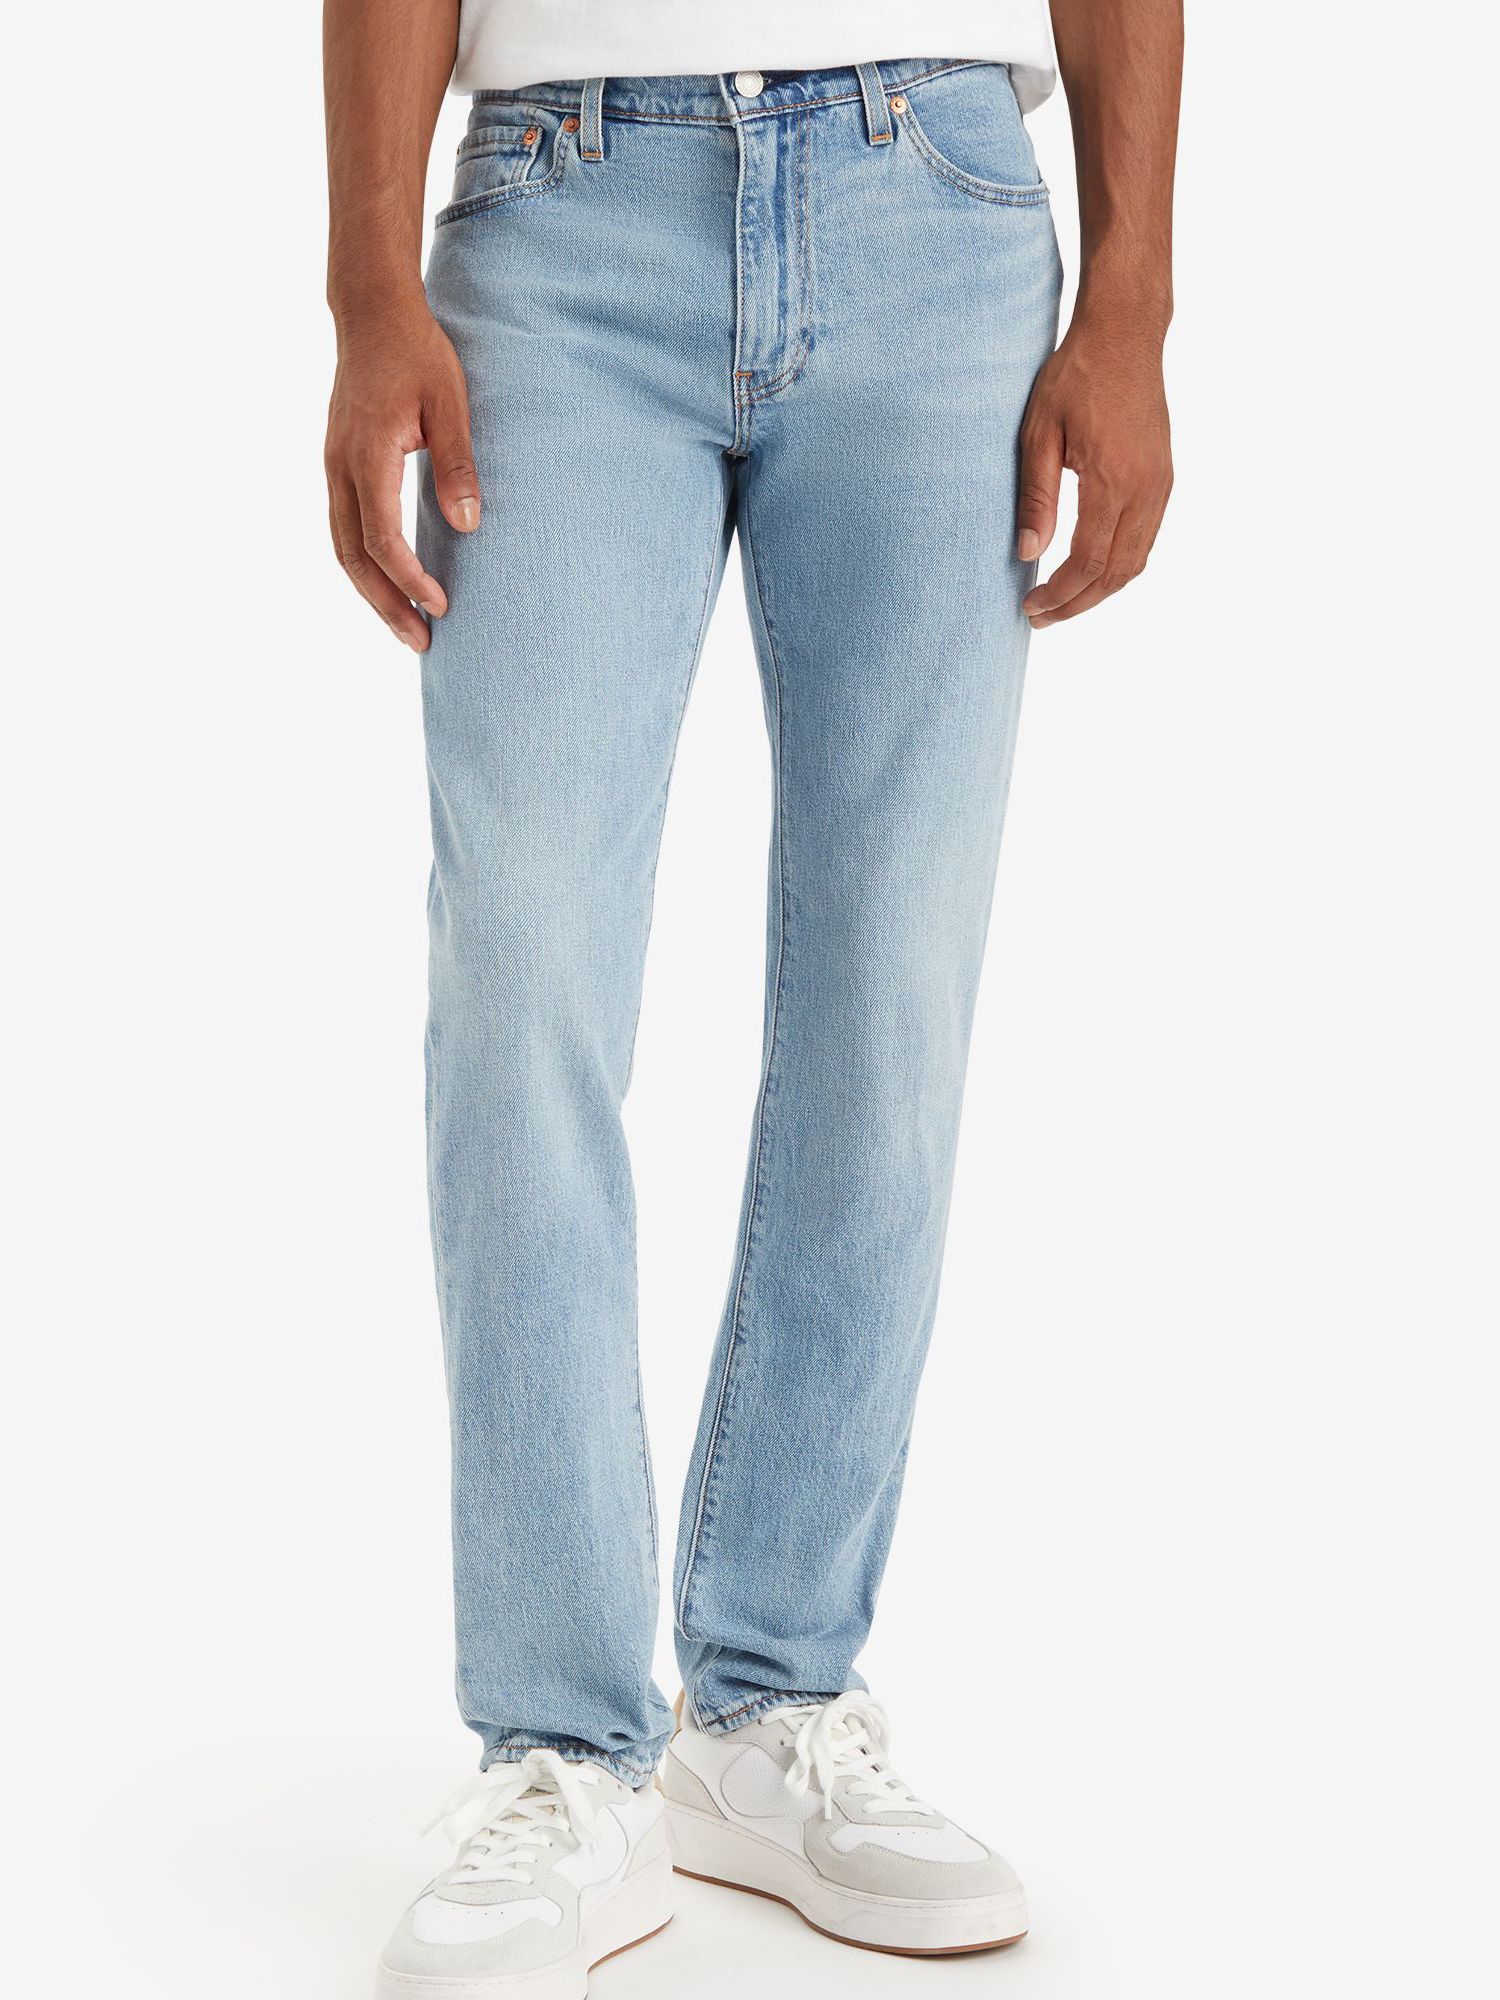 Levi's 501 Original Slim Jeans, Blue at John Lewis & Partners